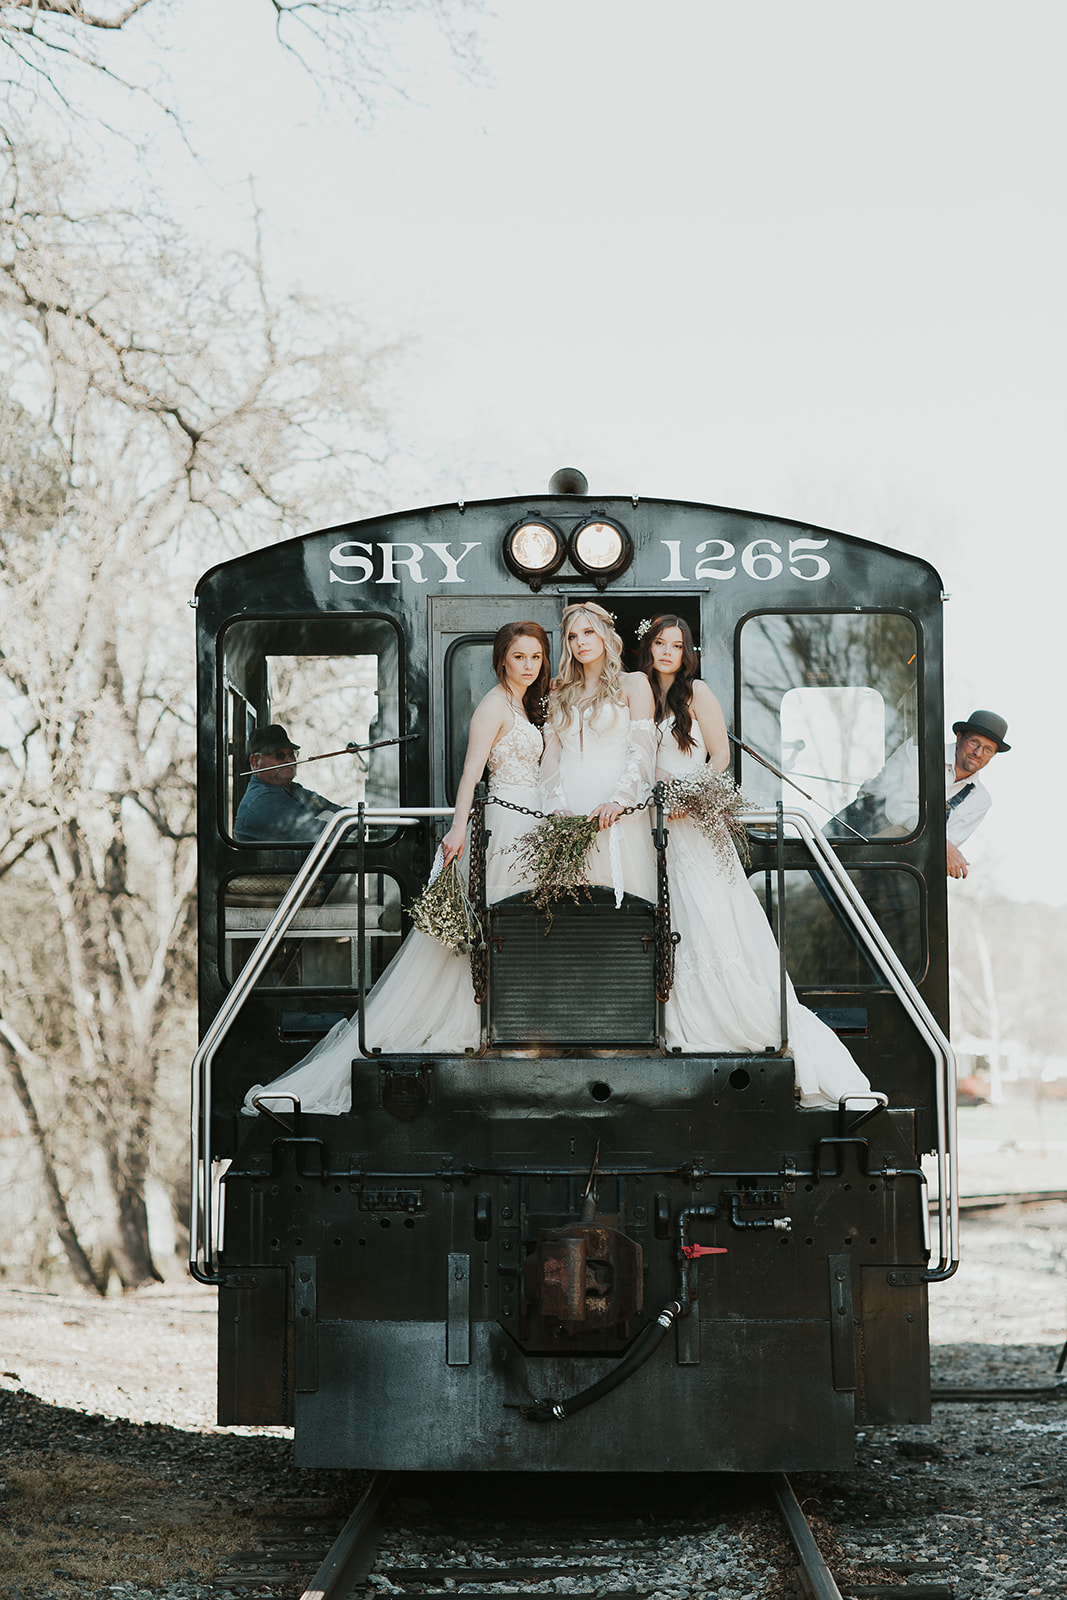 Wedding photo on historic locomotive